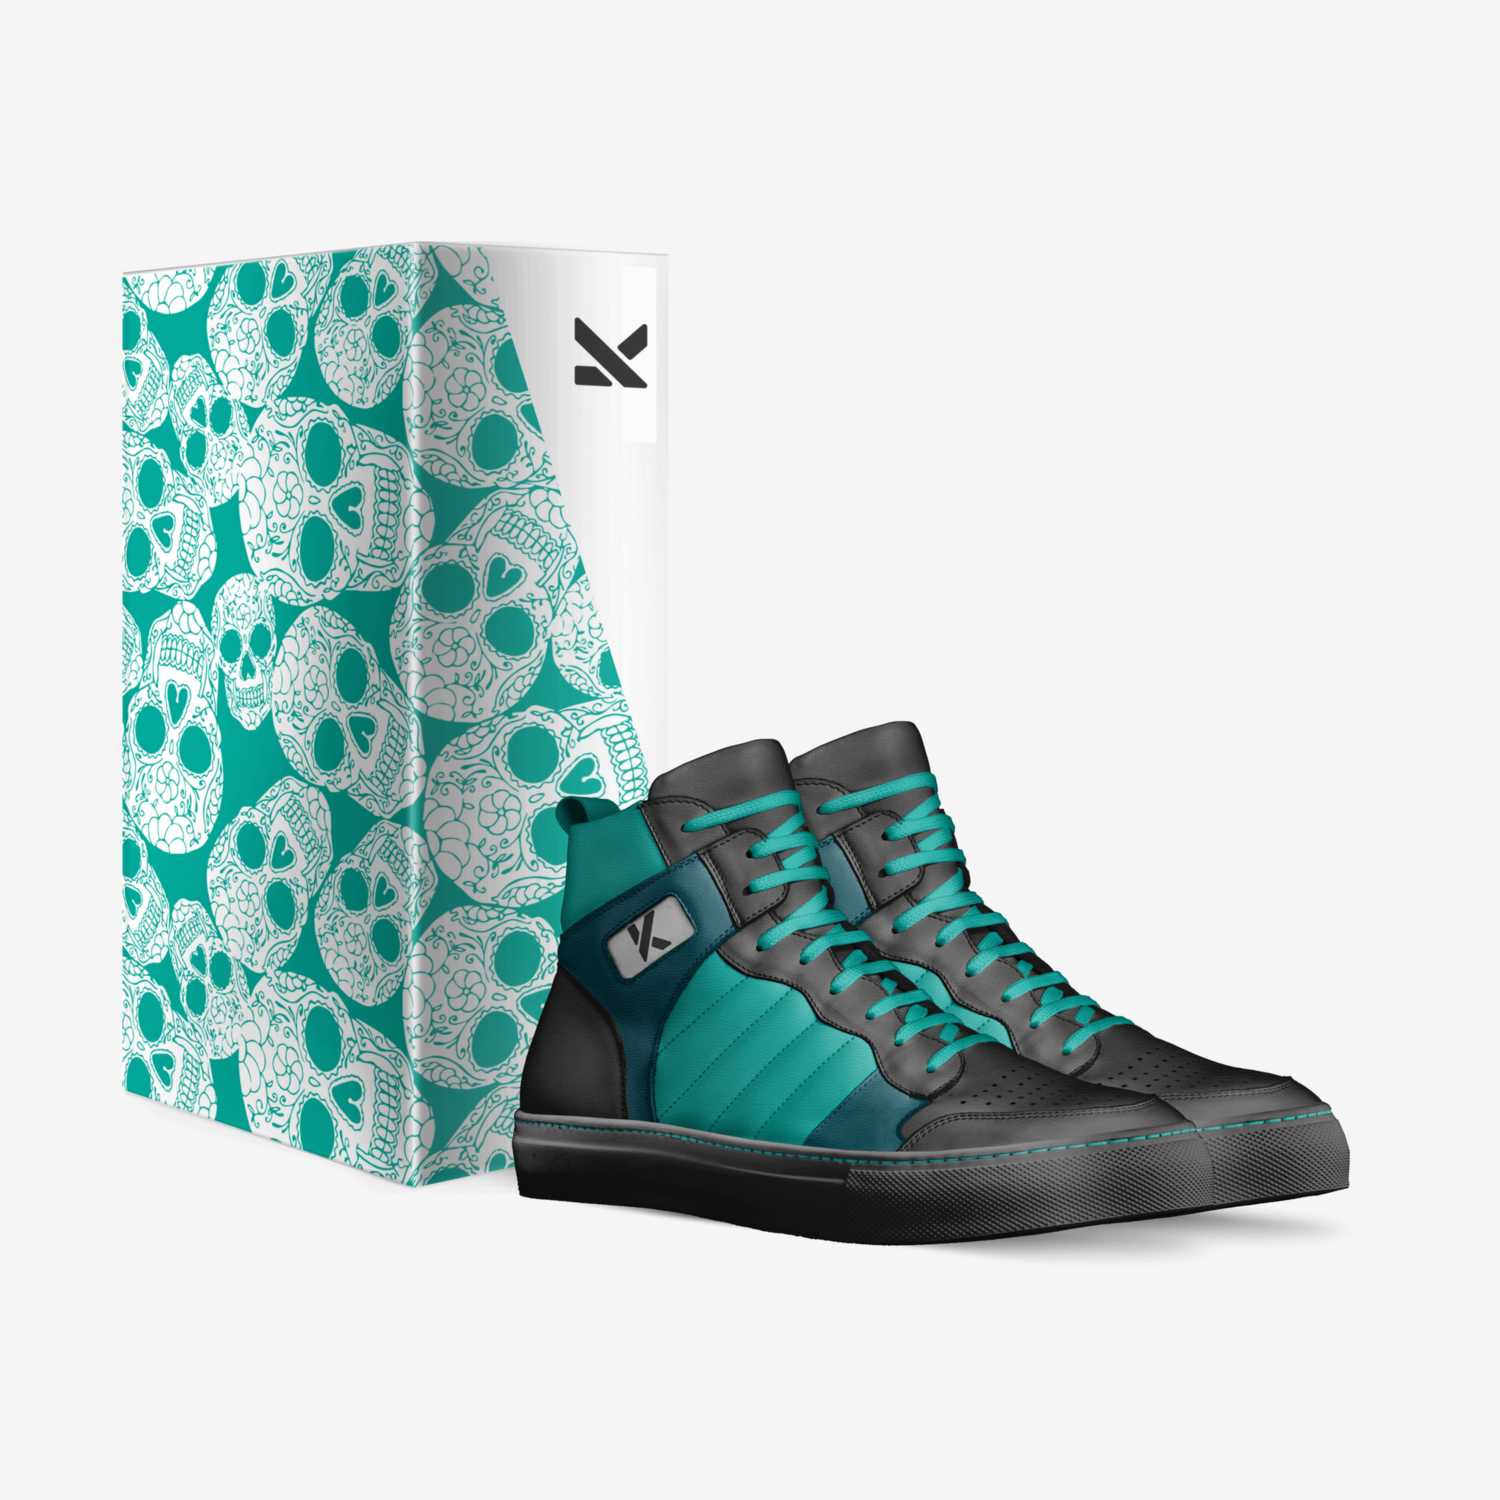 Kemba custom made in Italy shoes by John Ward Saber | Box view